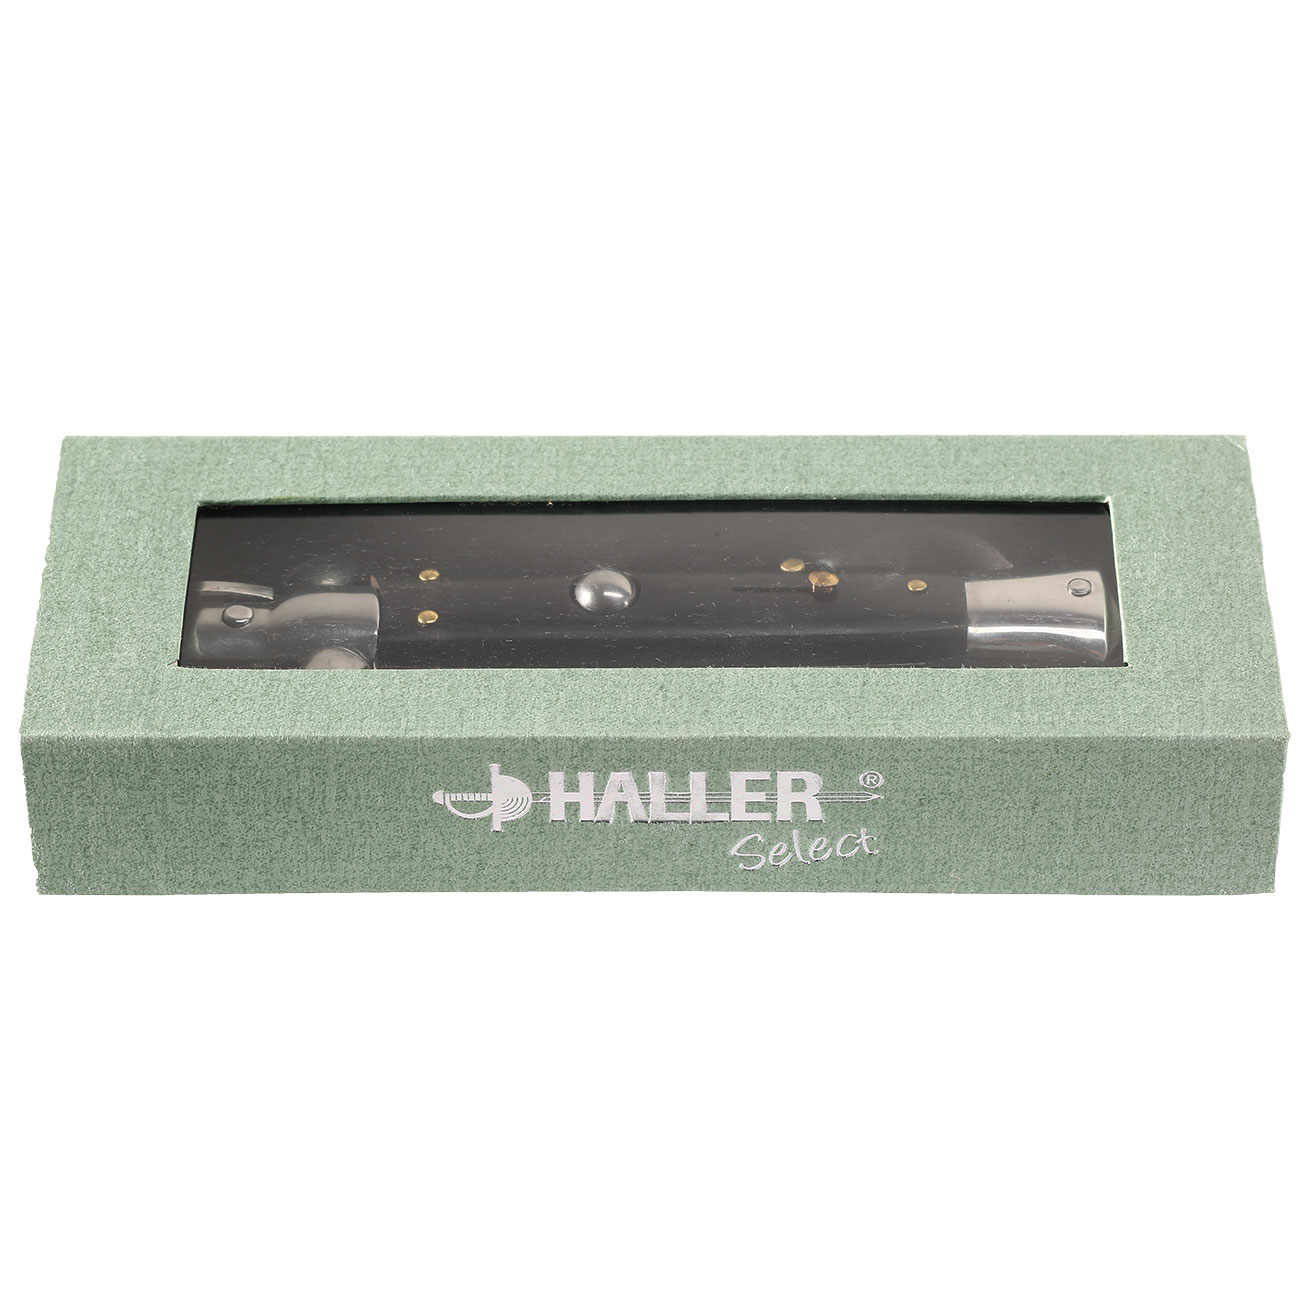 Haller Select Springmesser Sprogur II Stiletto Pakkaholz Bild 1